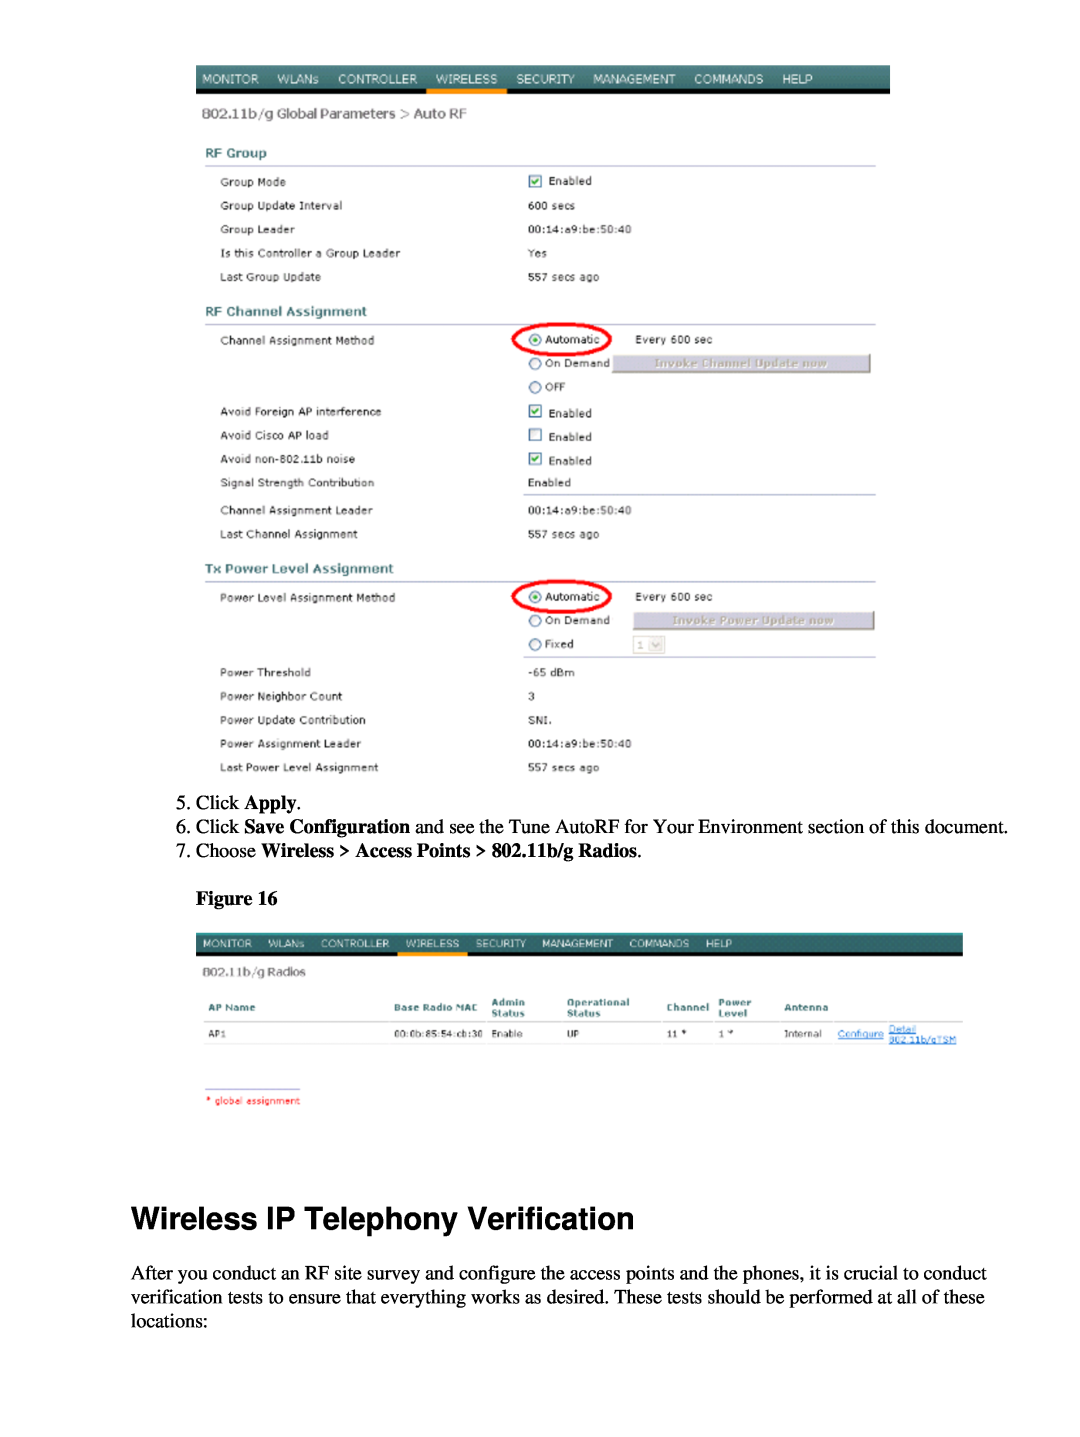 Cisco Systems 71642 manual Wireless IP Telephony Verification, Choose Wireless Access Points 802.11b/g Radios 